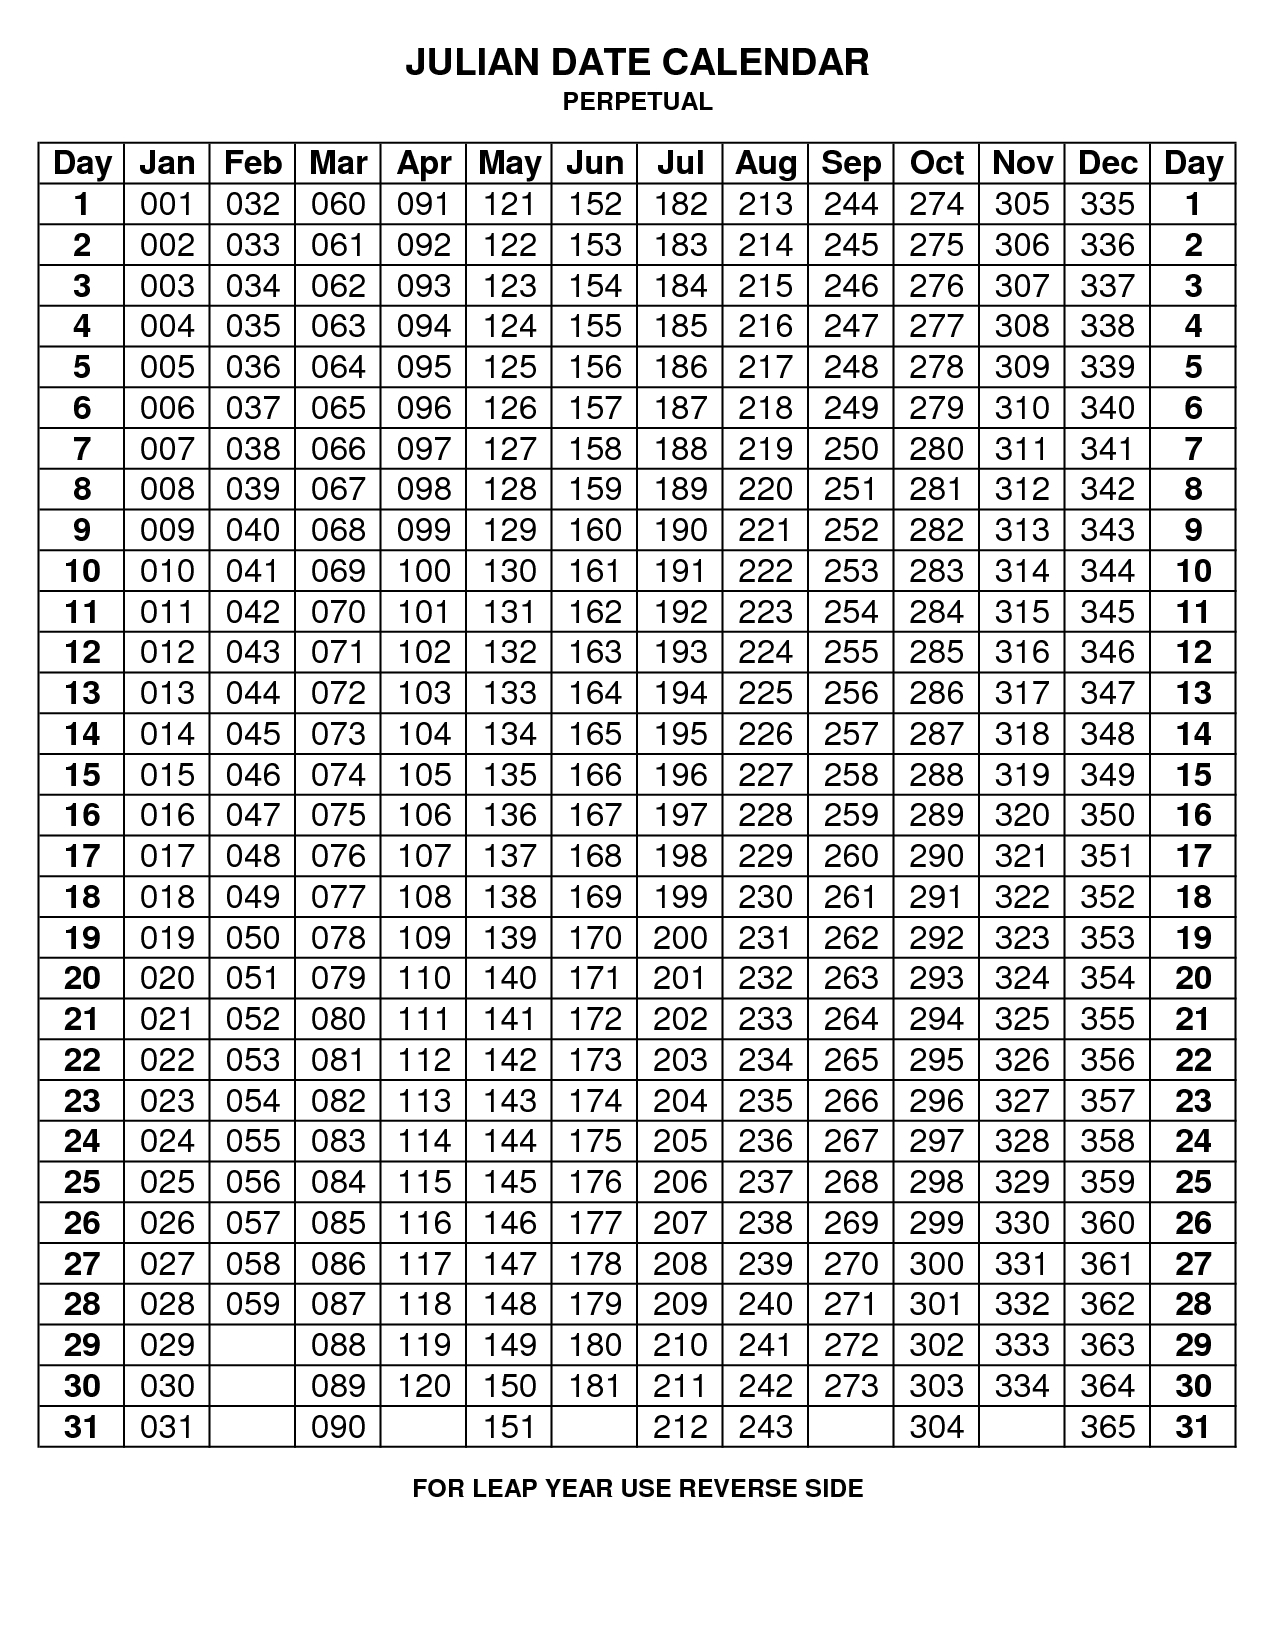 Julian Code - Non-Leap Year | Julian Dates, Printable pertaining to 2020 Yearly Calendar With Julian Dates